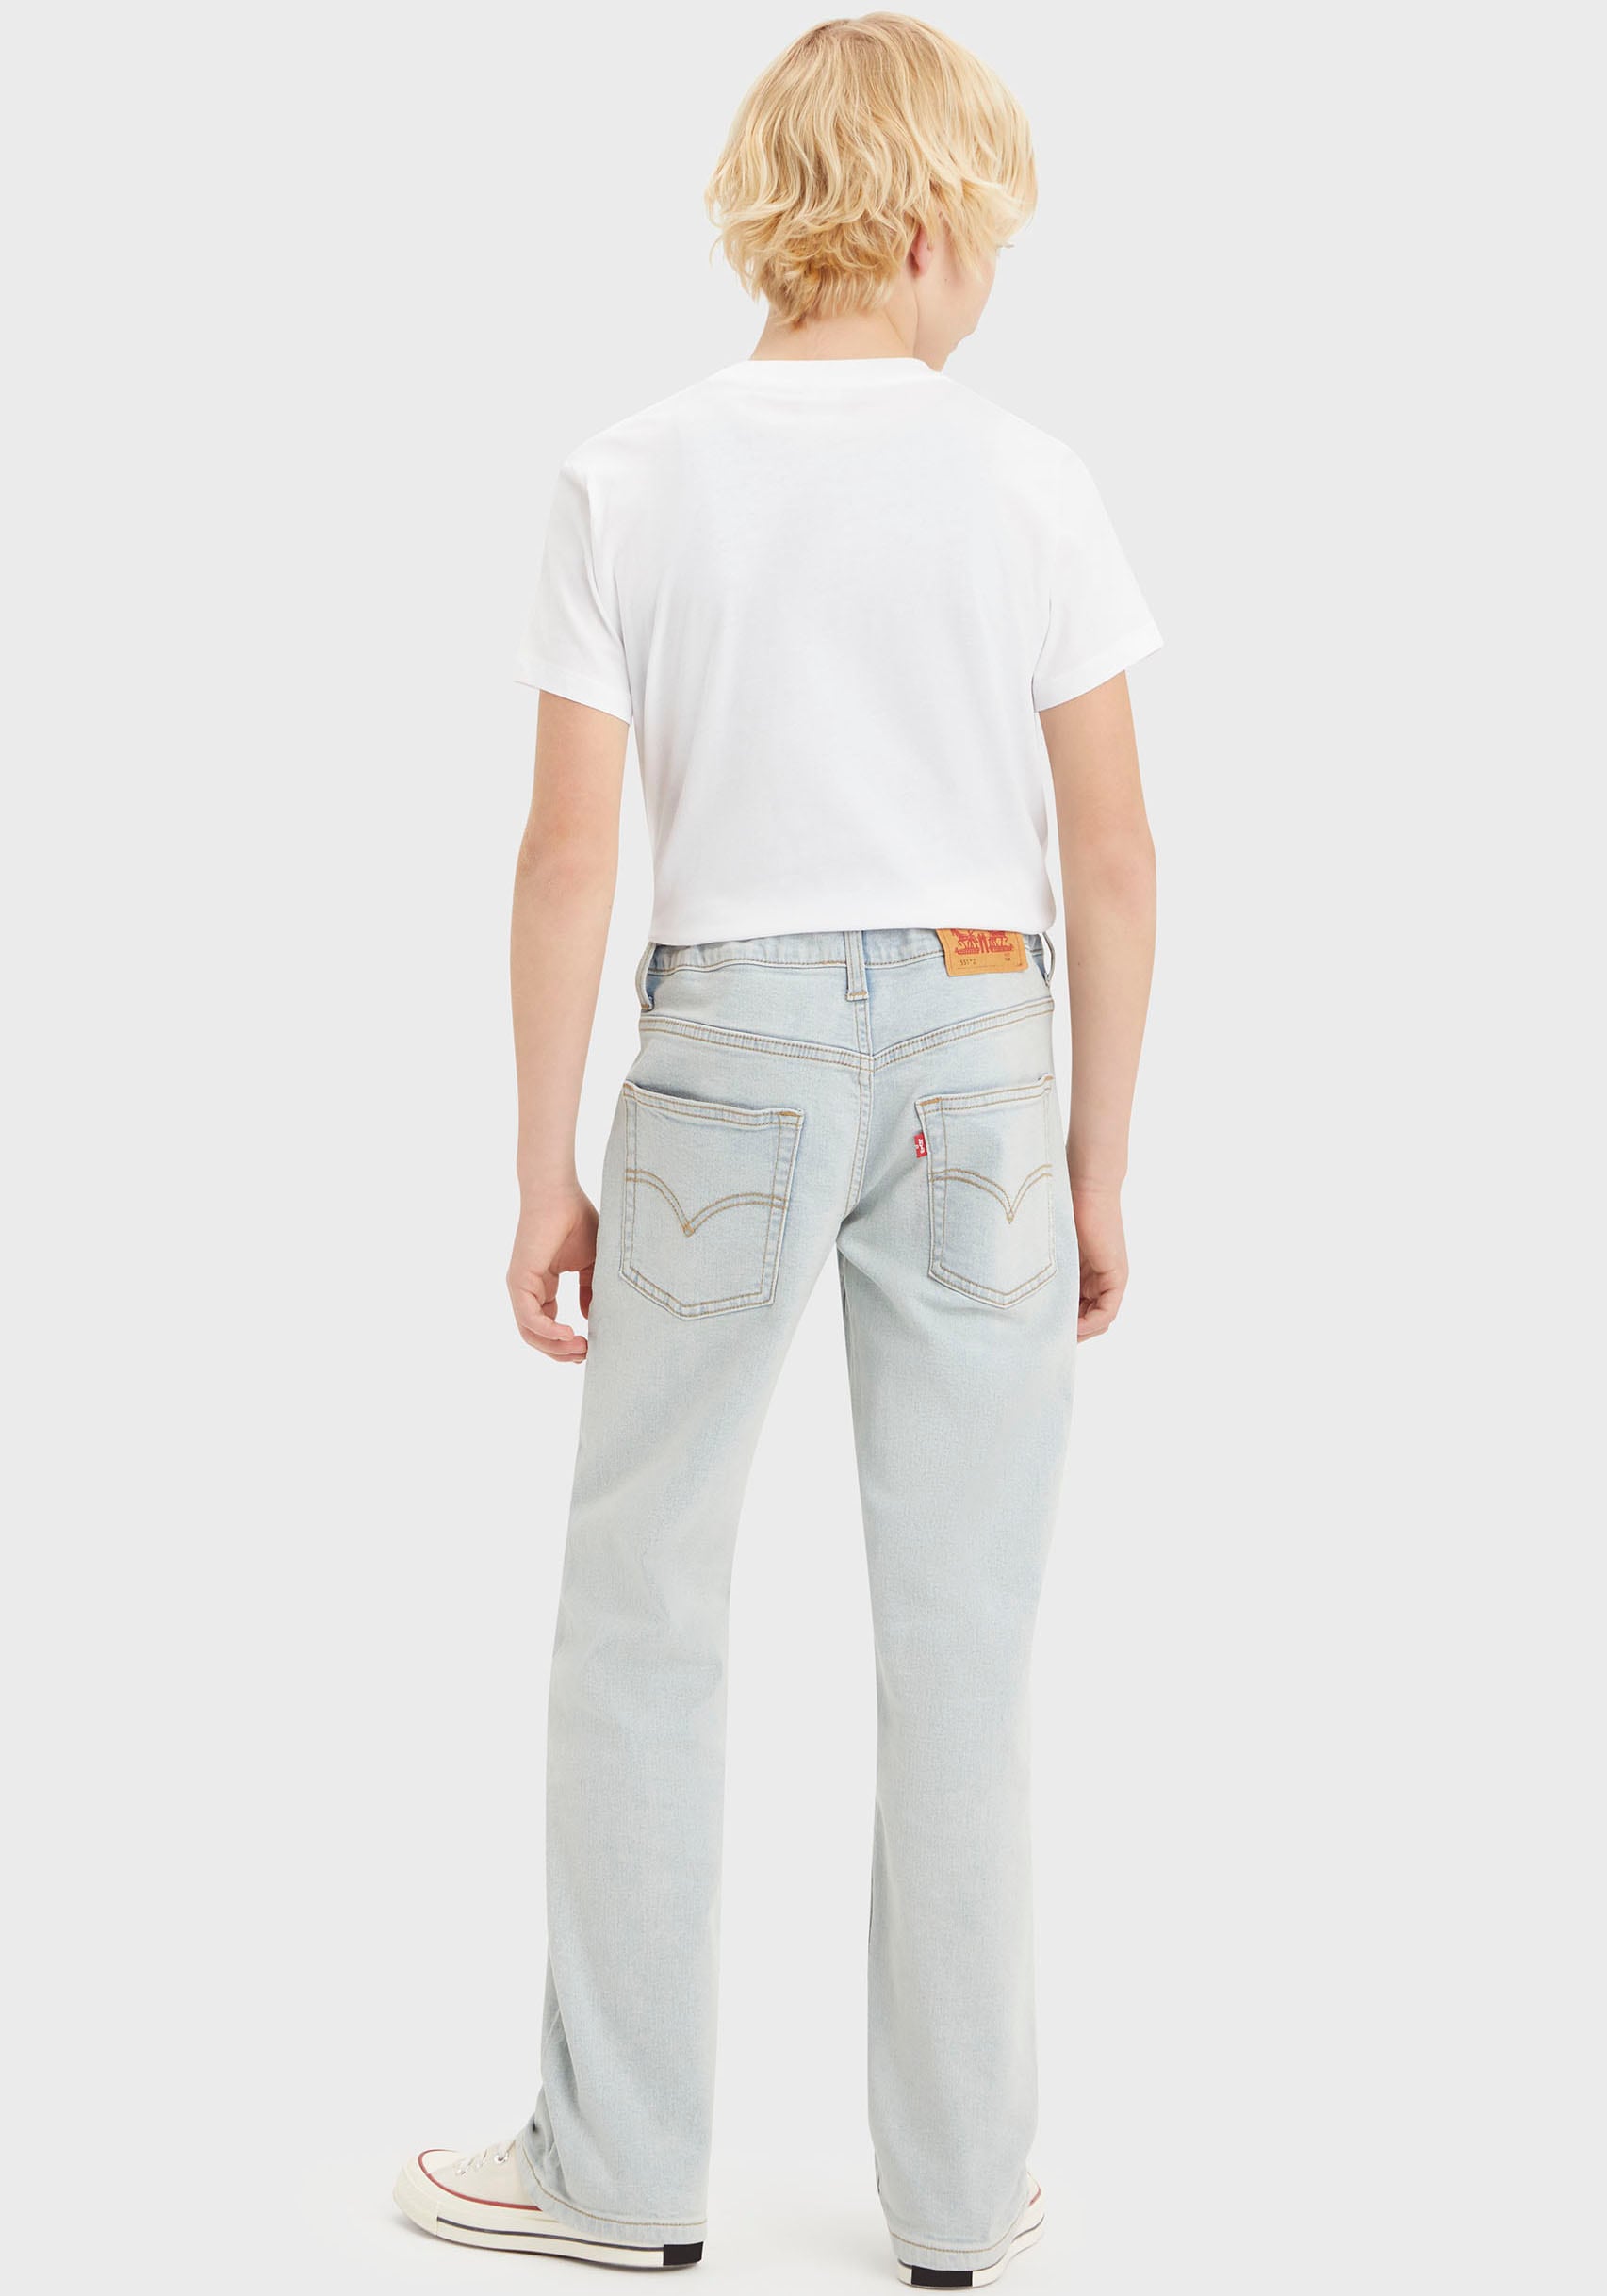 Levi's® Kids Straight-Jeans »LVB 551Z AUTHENTIC STRGHT JEAN«, for BOYS